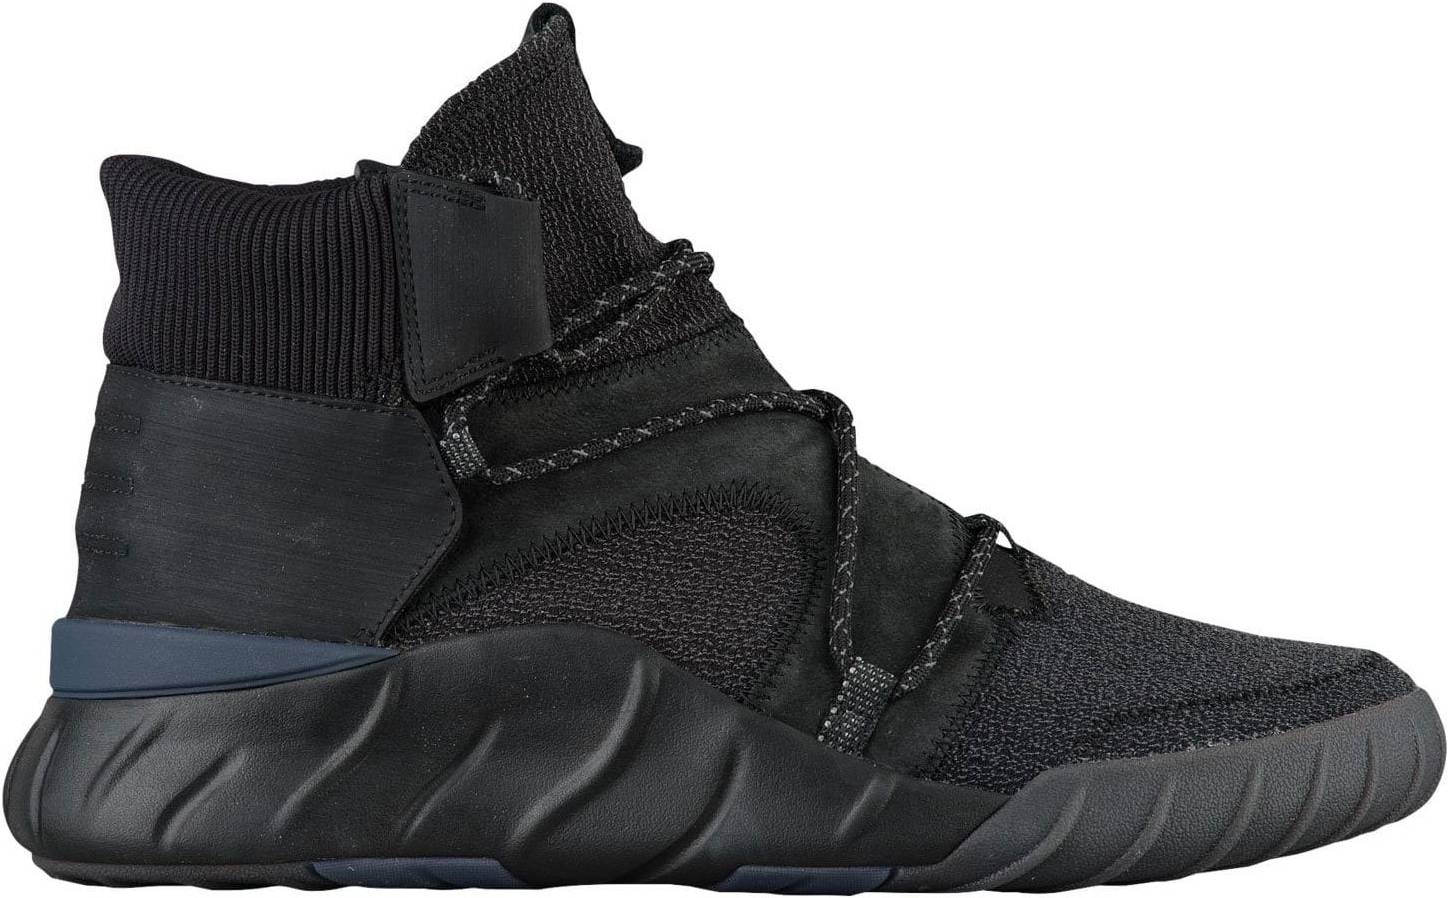 Adidas Tubular X 2.0 sneakers in black 